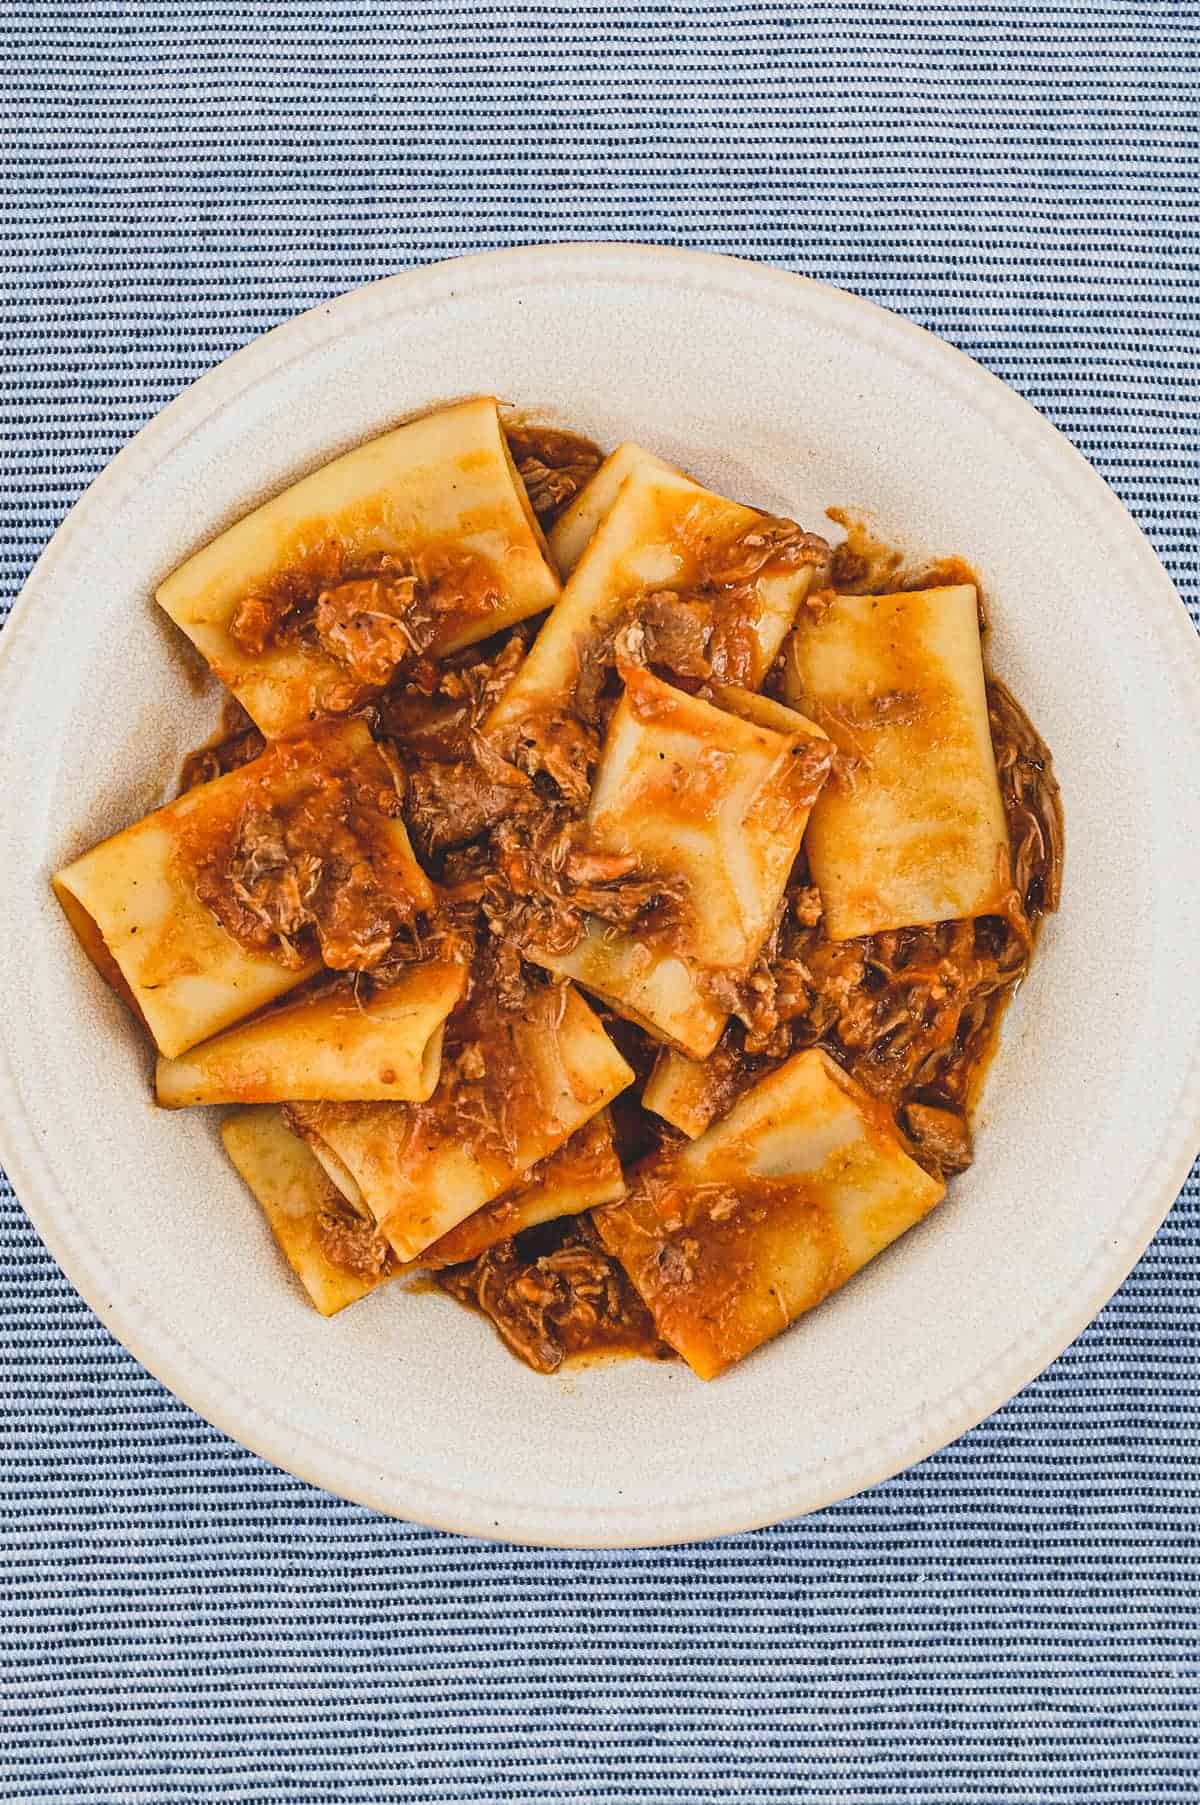 A bowl of paccheri pasta with a rich Neapolitan ragù sauce